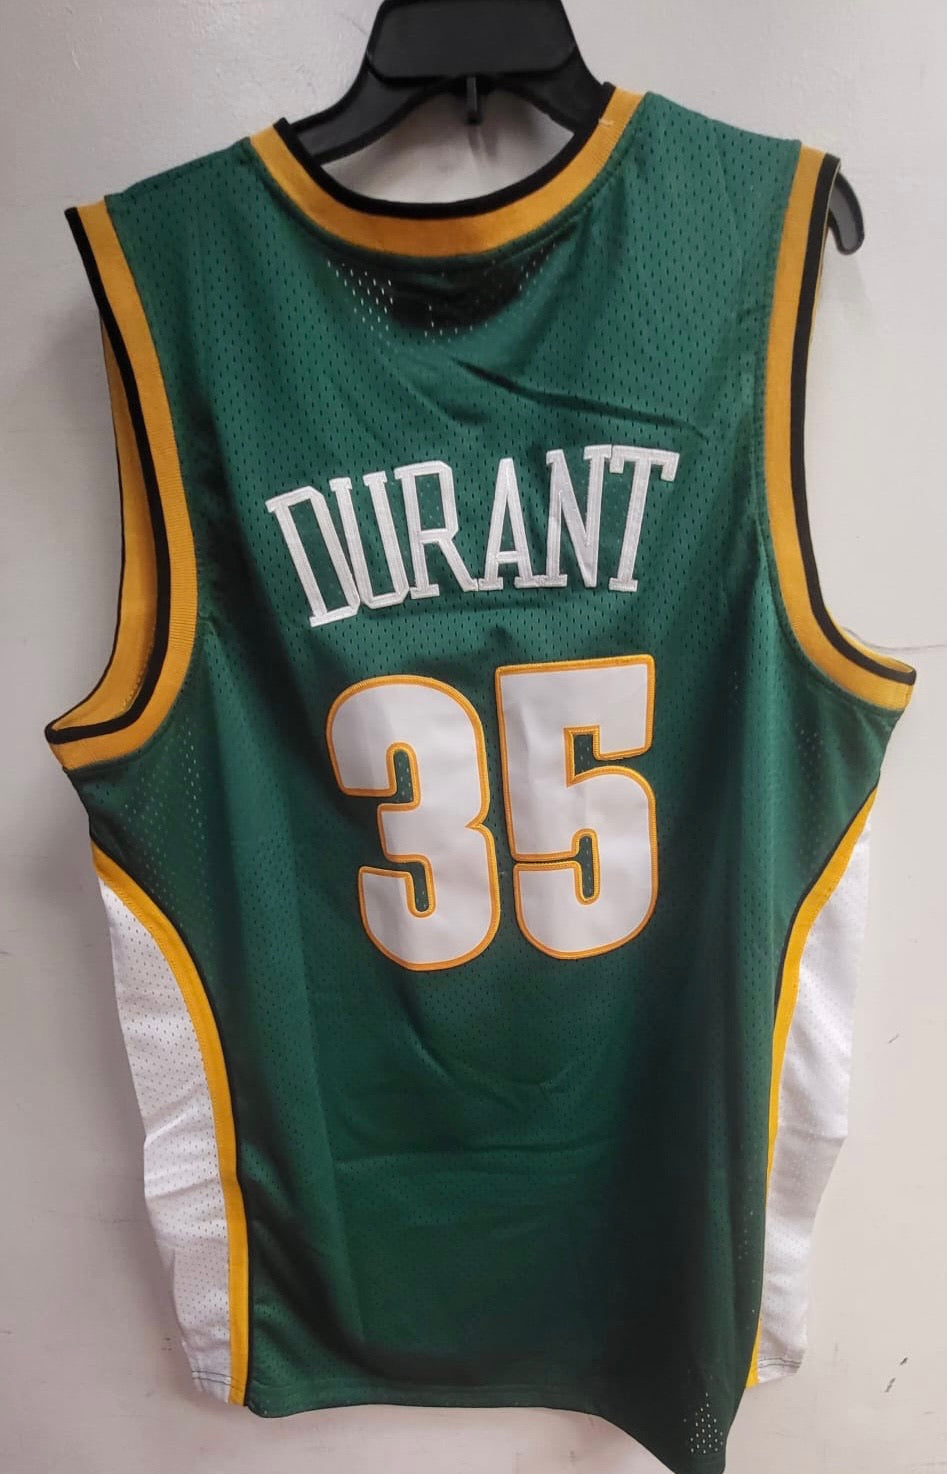 S) Vintage Nike Kevin Durant Supersonics Jersey